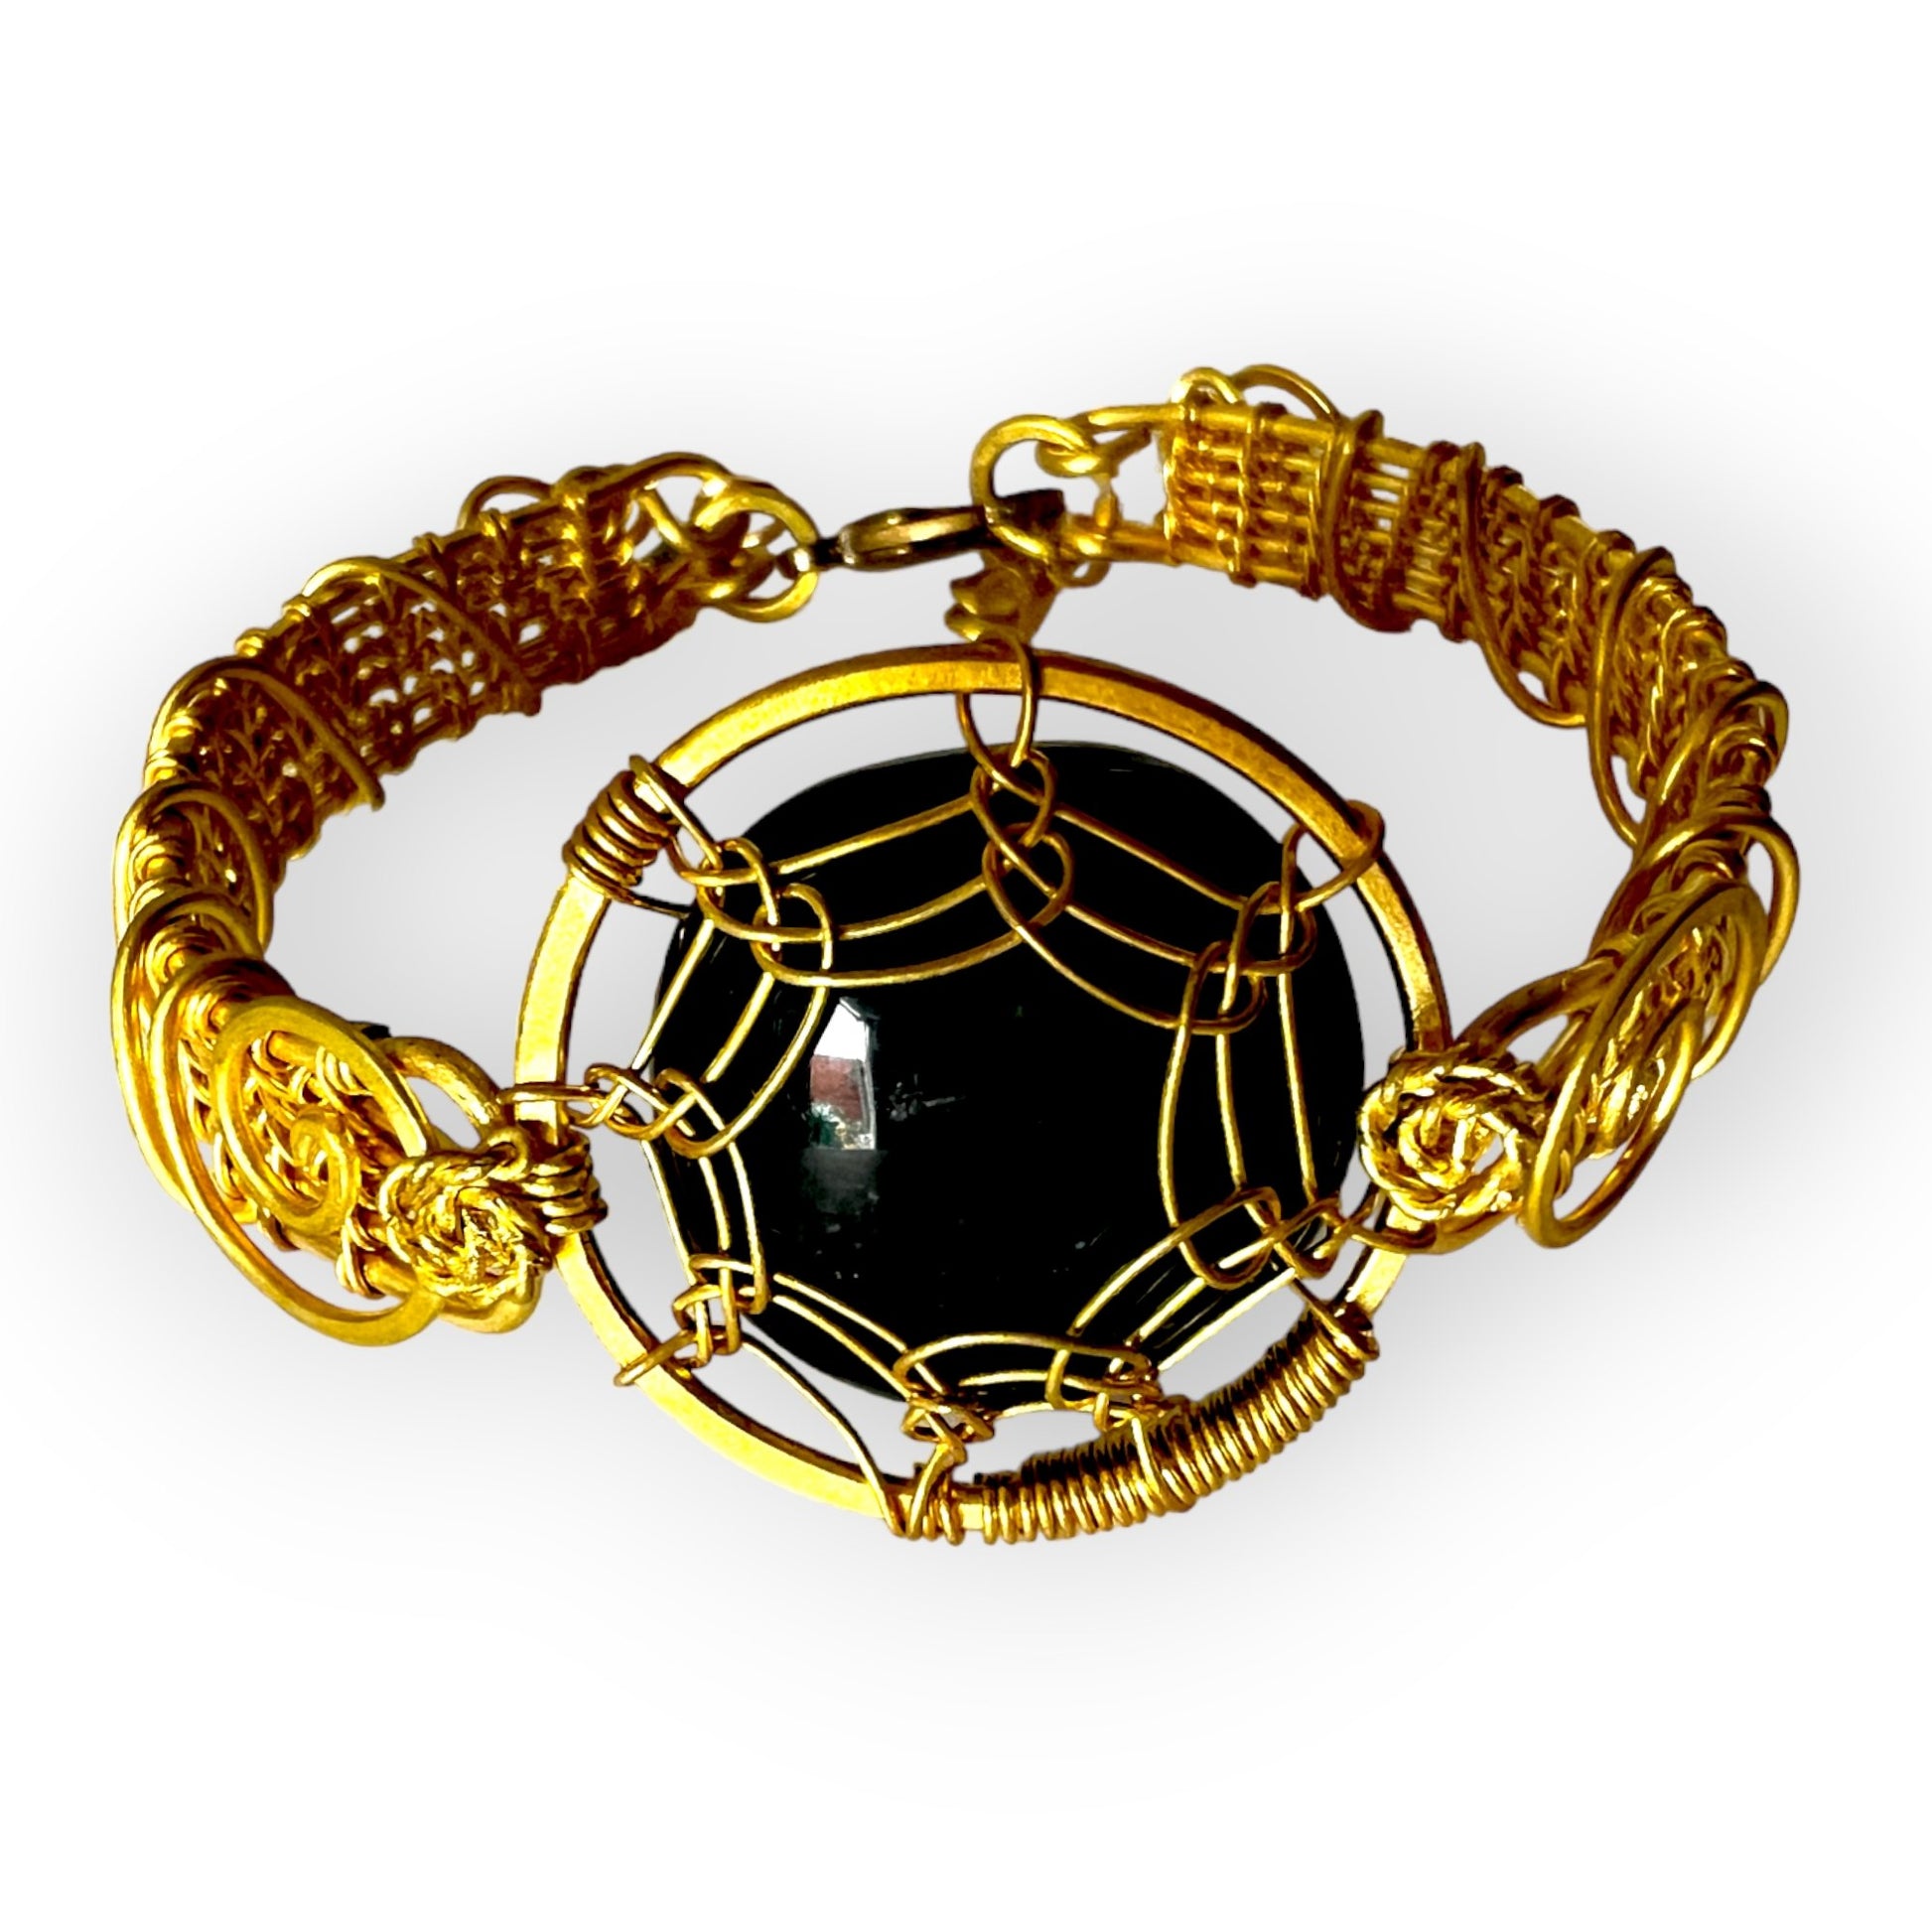 Lacy woven bracelet with colorful gemstone center - Sundara Joon